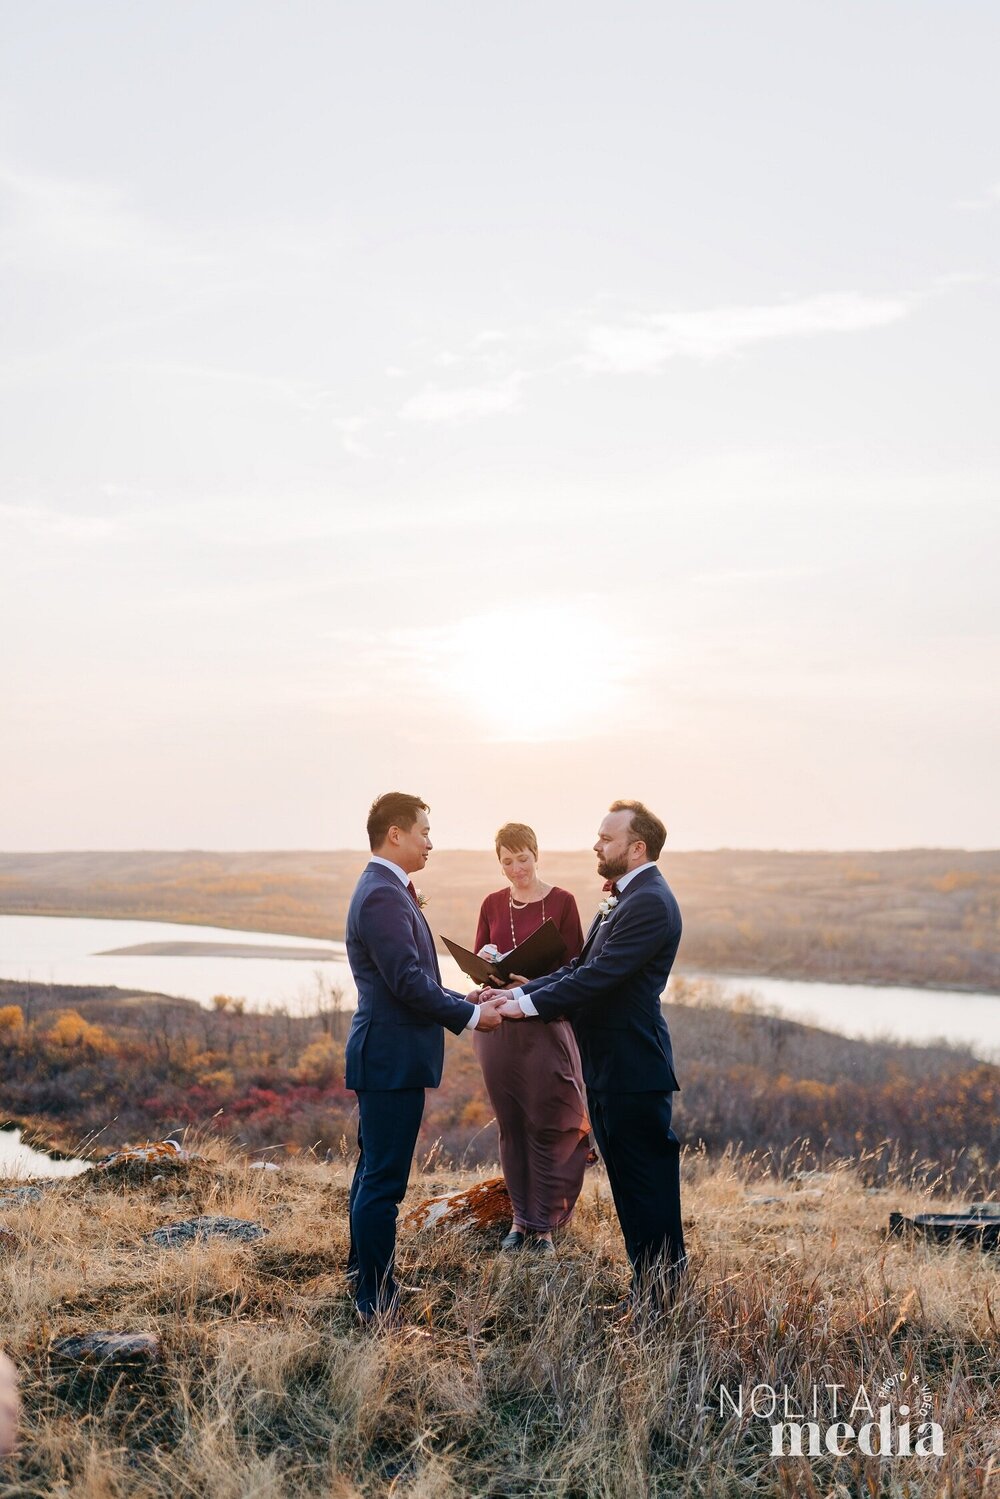 Allen+and+David_two+grooms_LGBTQ+wedding_North+Saskatchewan+River_sunset_Karla+Combres+Celebrant.jpg